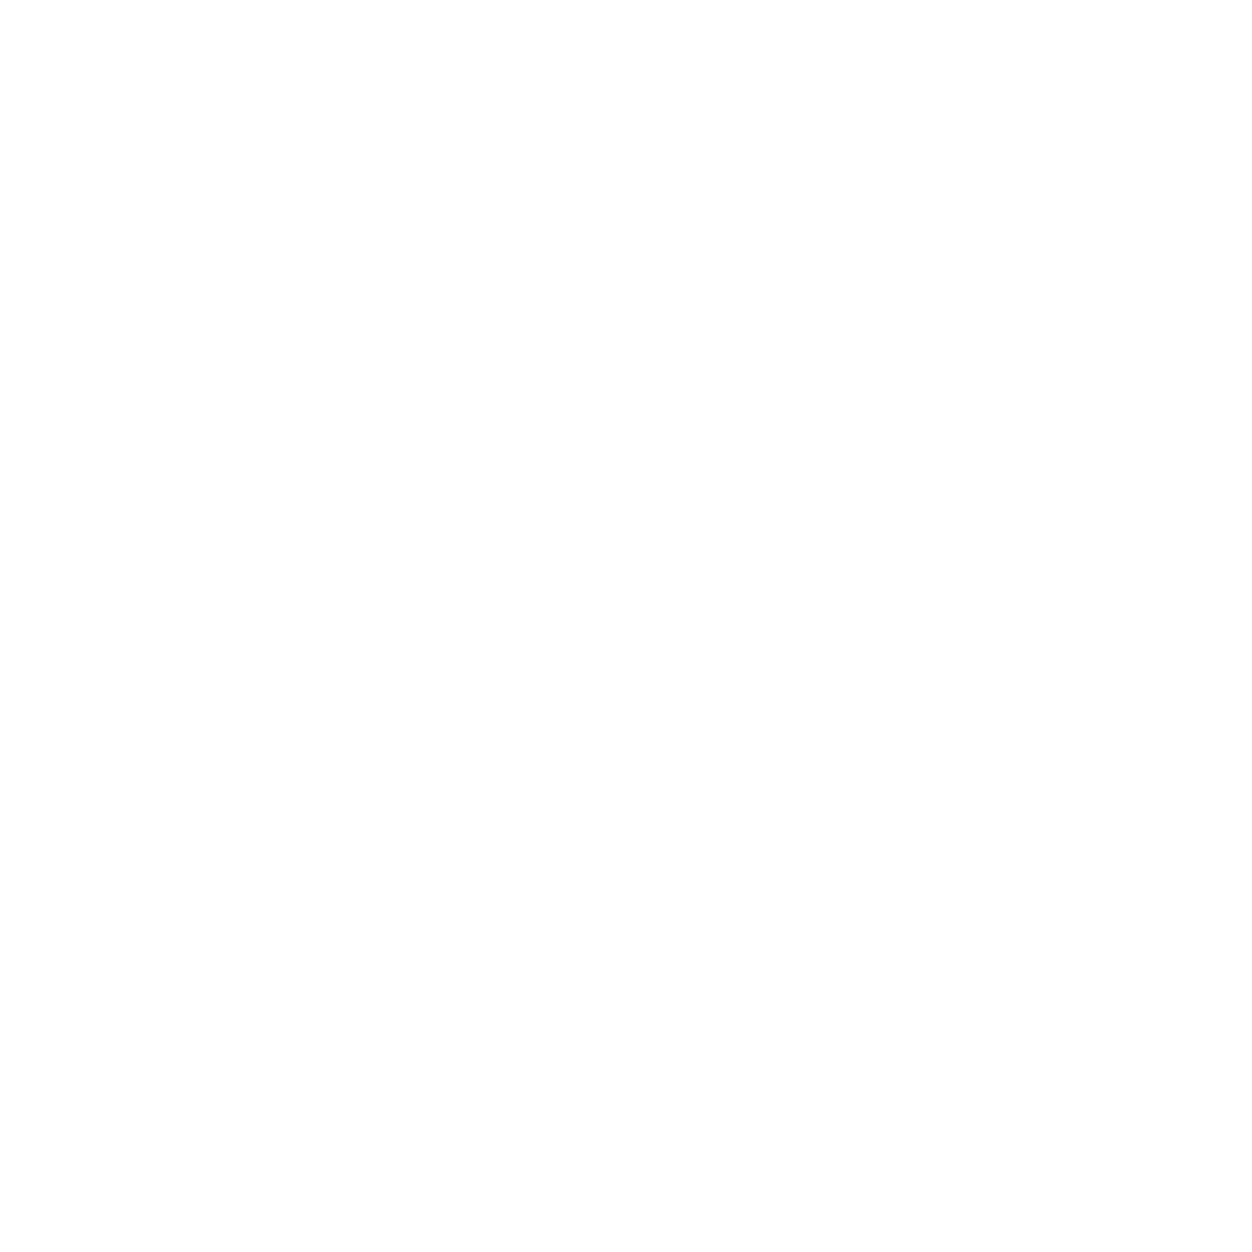 Hill Pine’s Coffee Roasters